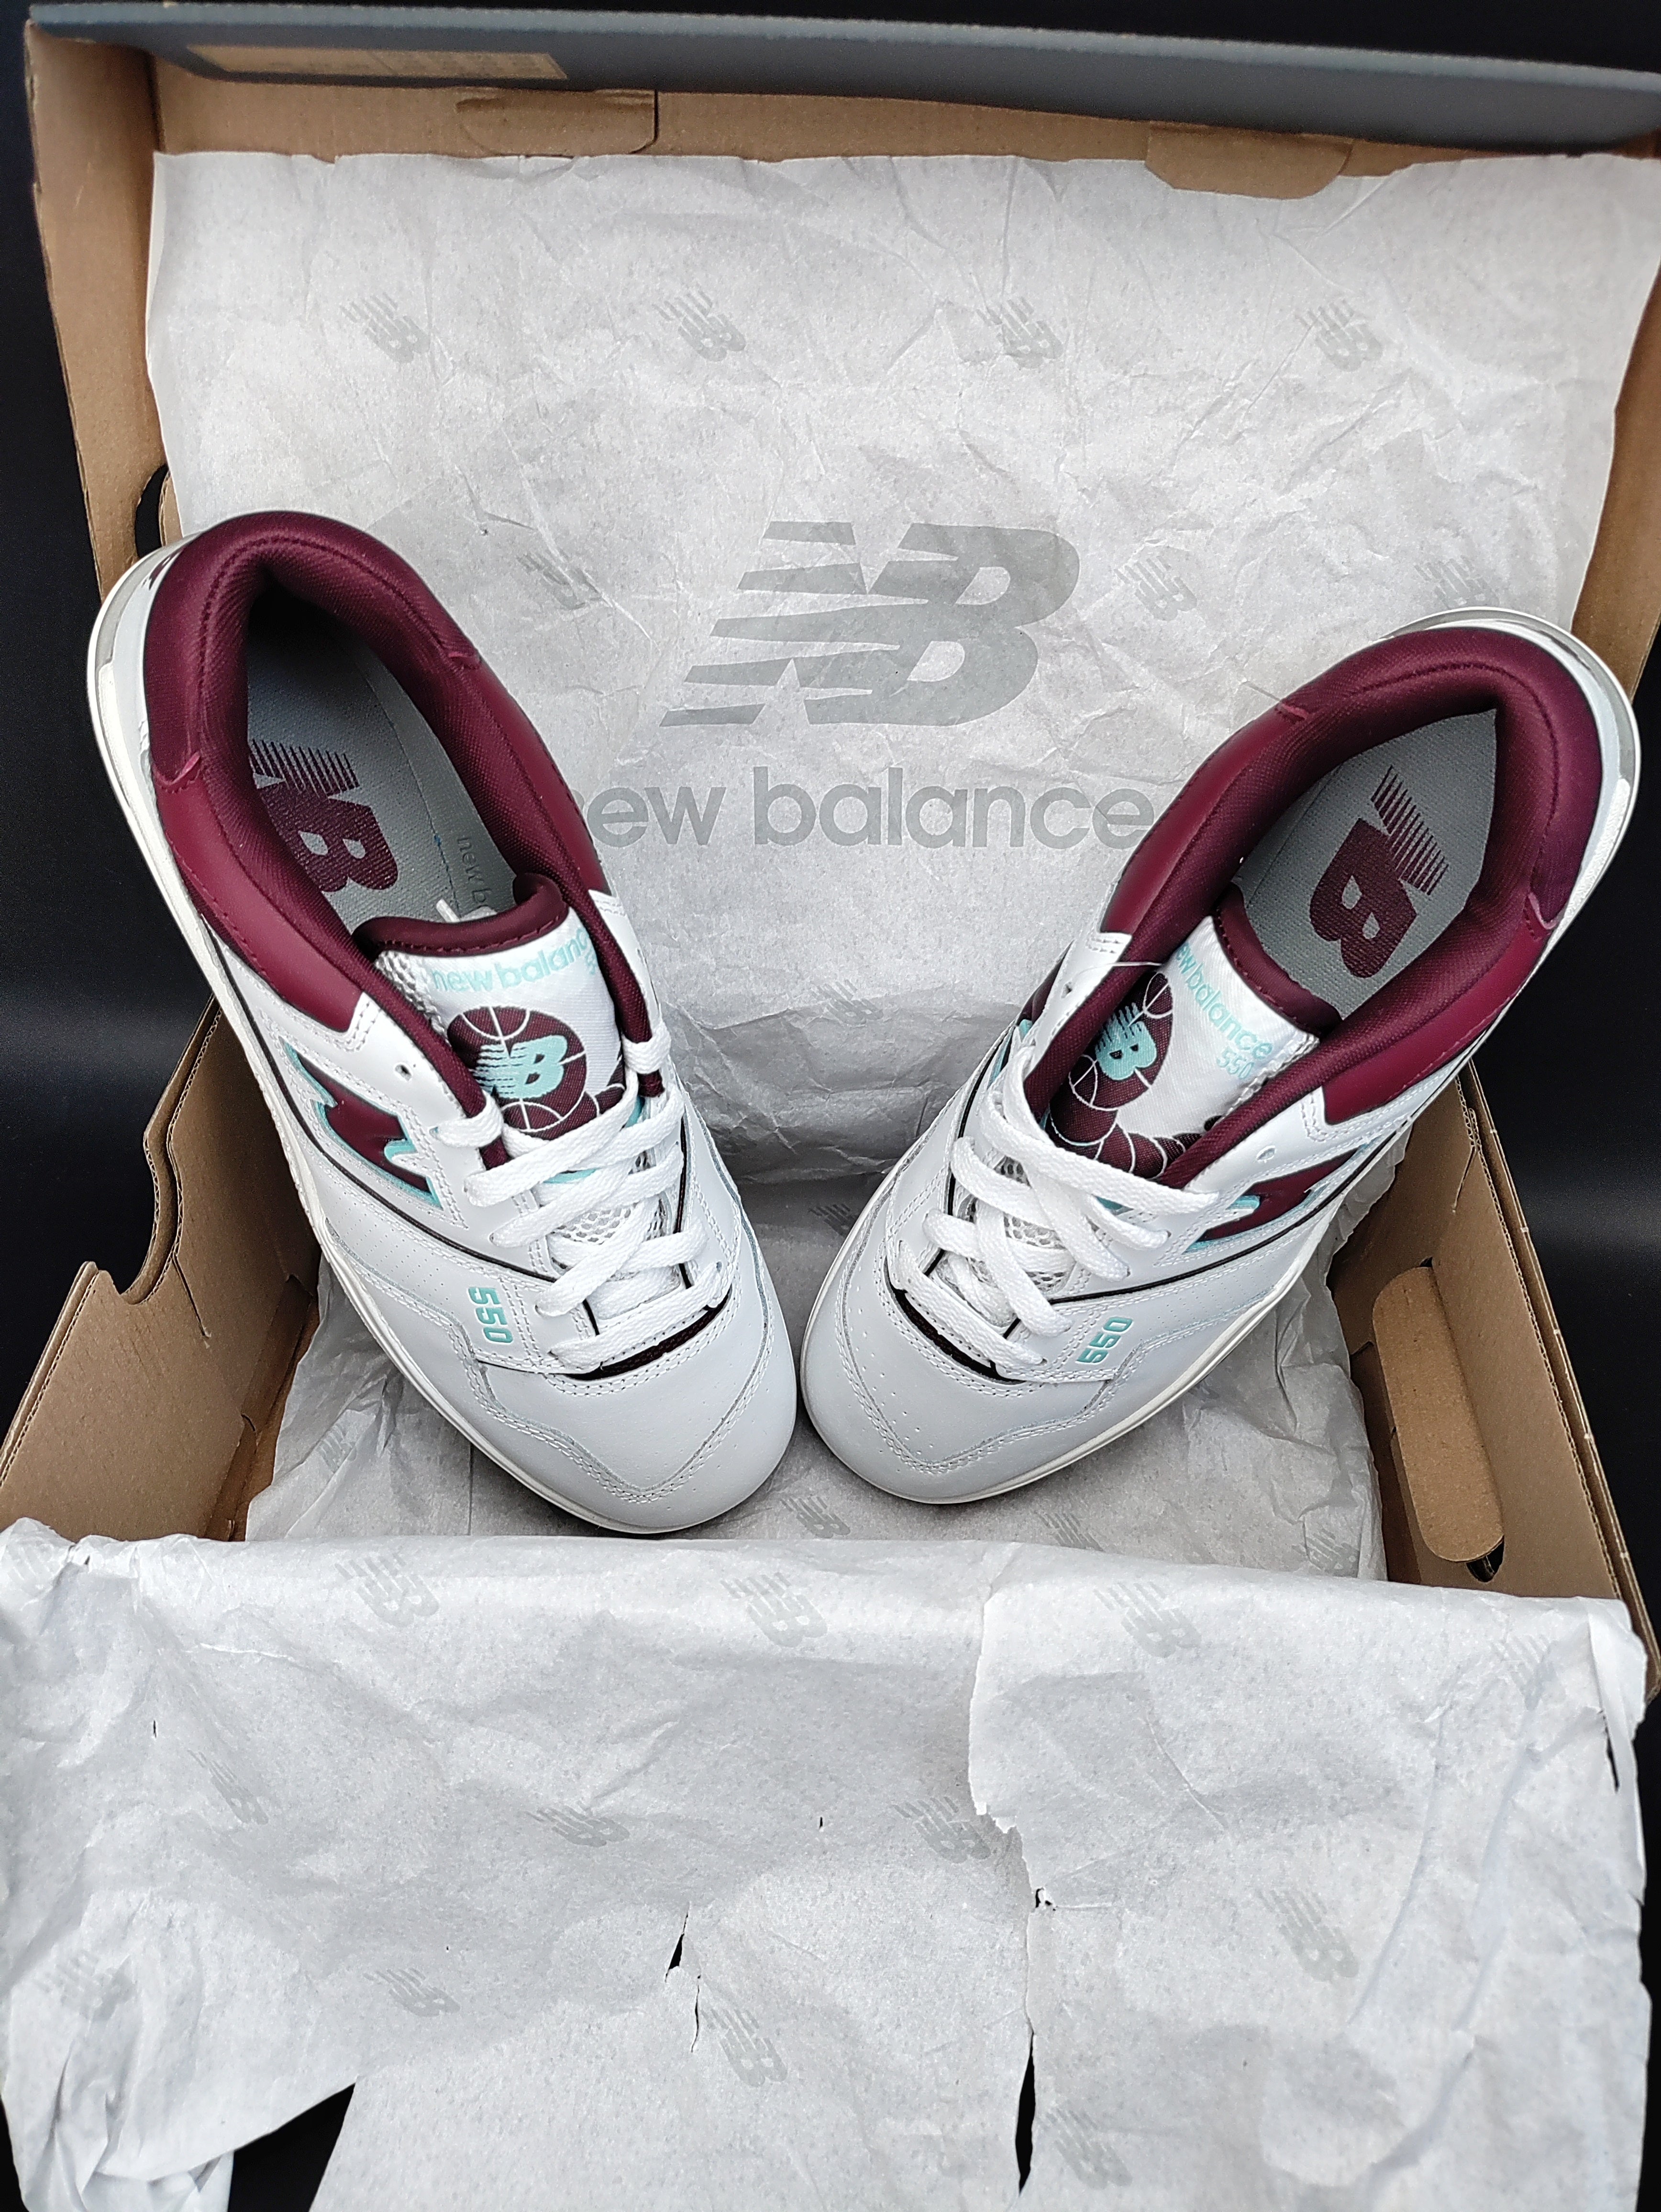 New Balance 550 - Burgundy & Turquoise/Cyan : r/Sneakers